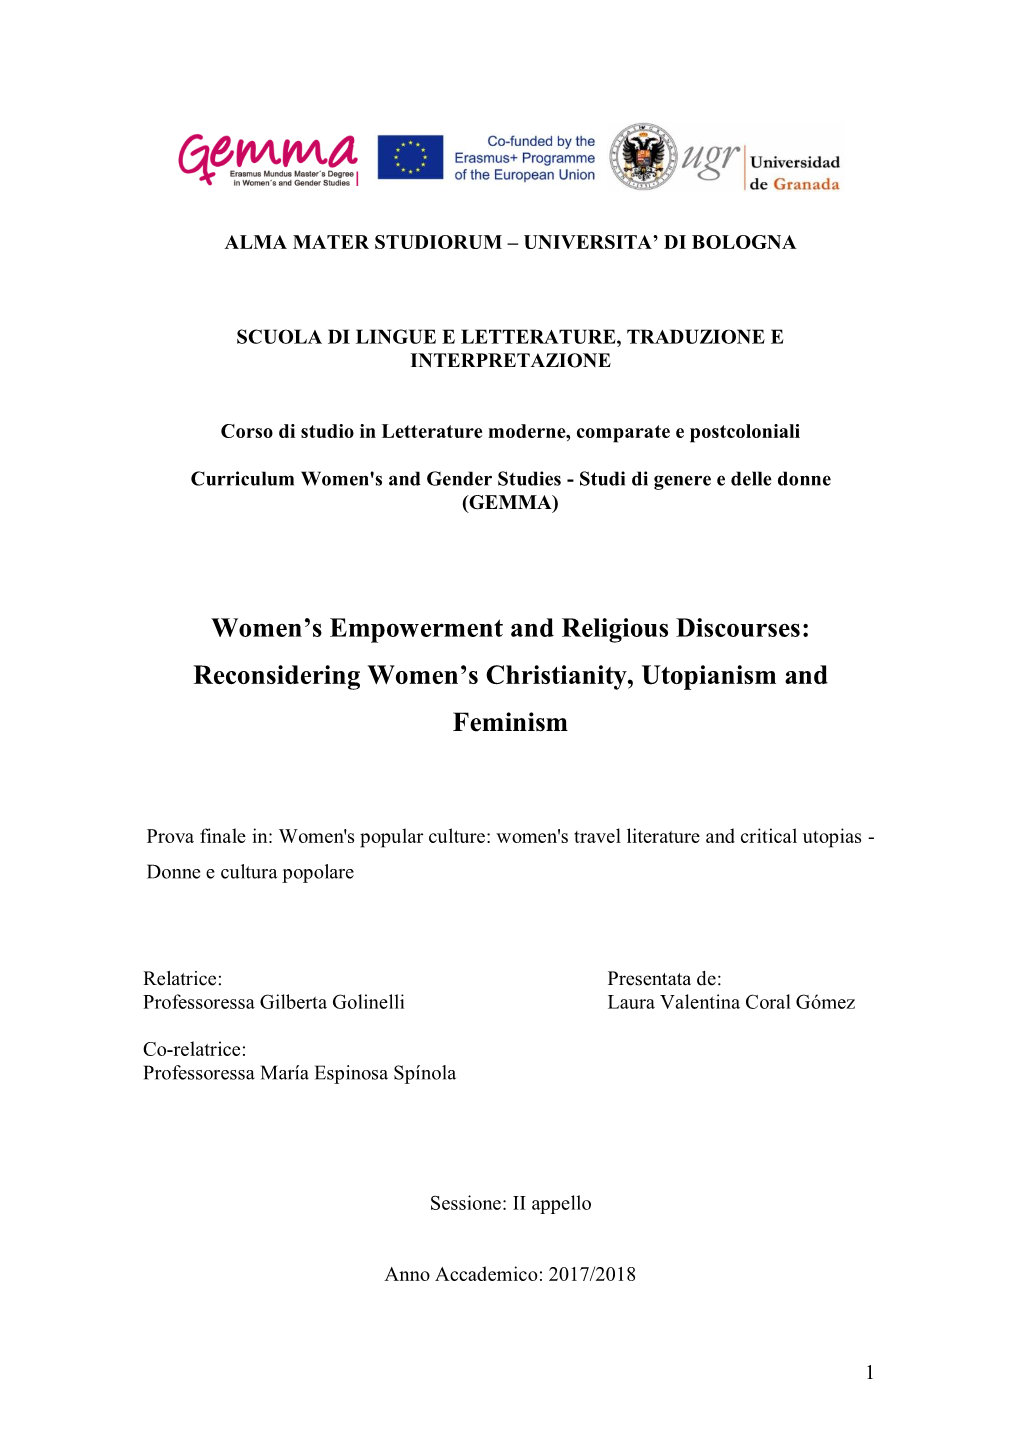 Women's Empowerment and Religious Discourses